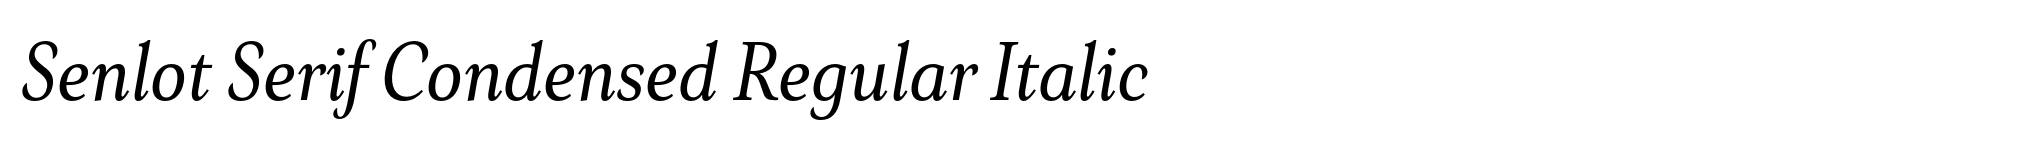 Senlot Serif Condensed Regular Italic image